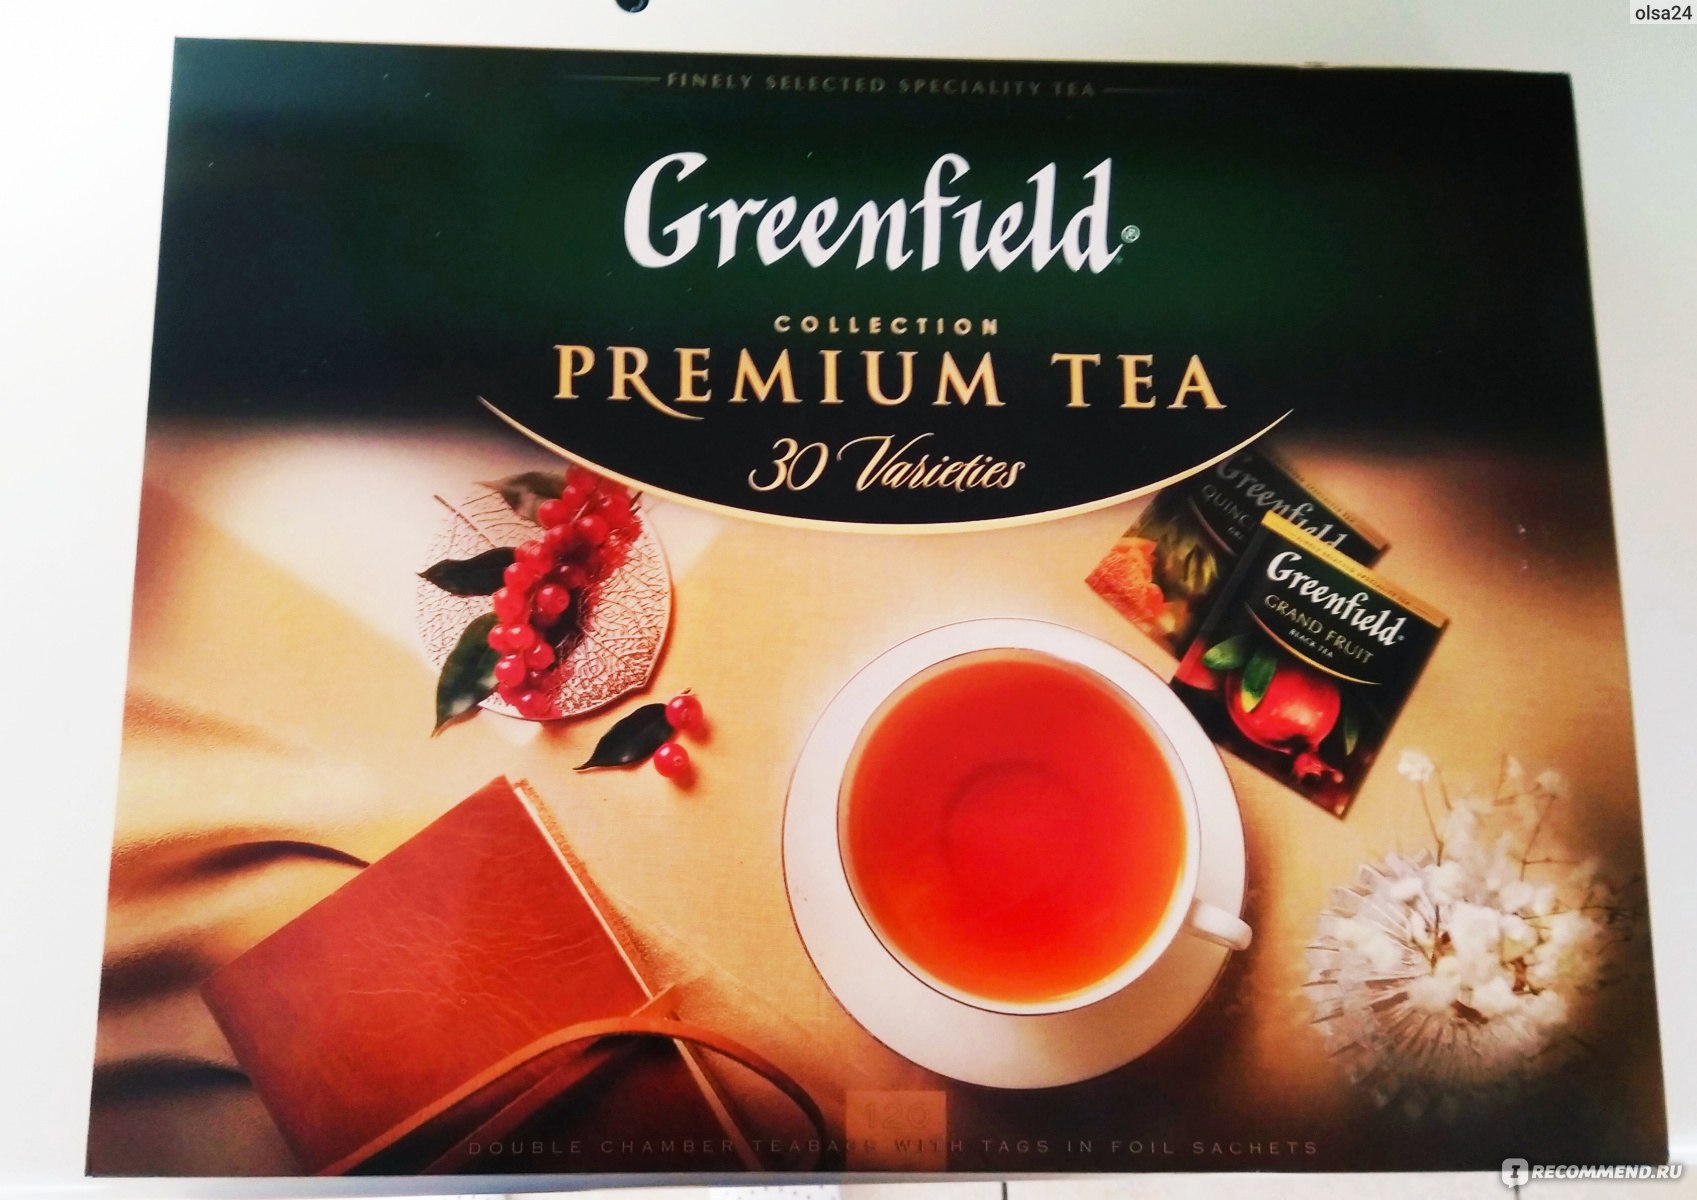 Greenfield collection. Коллекция чая Гринфилд. Гринфилд премиум Теа. Чай Greenfield Premium Tea. Чай Гринфилд Premium Tea 30 varieties.